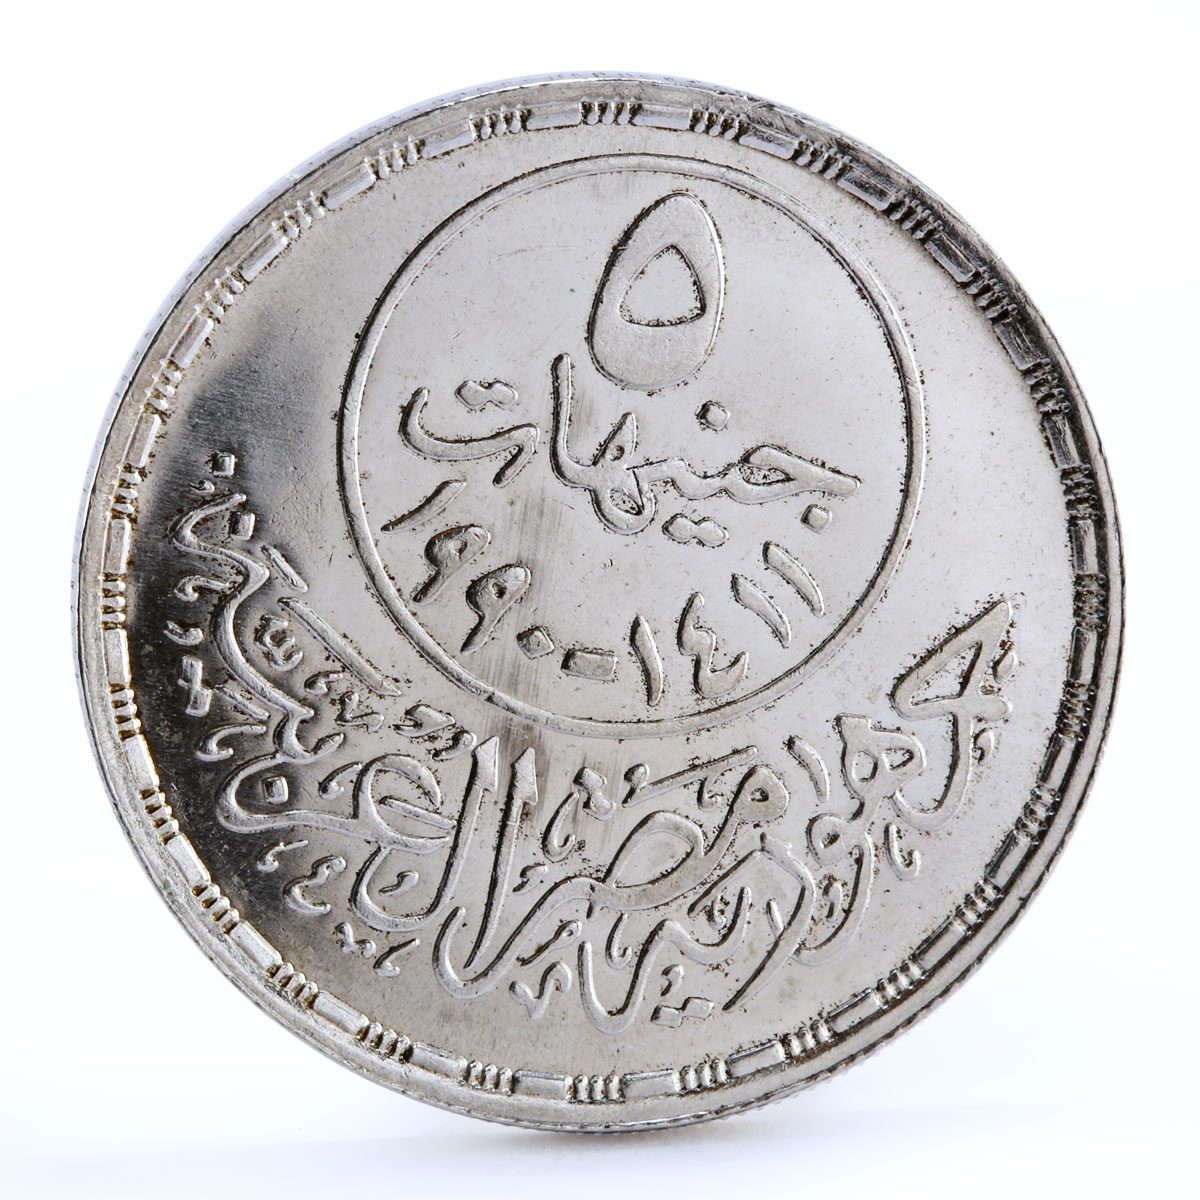 Egypt 5 pounds Alexandria Sports Club Football Swimming Judo silver coin 1990